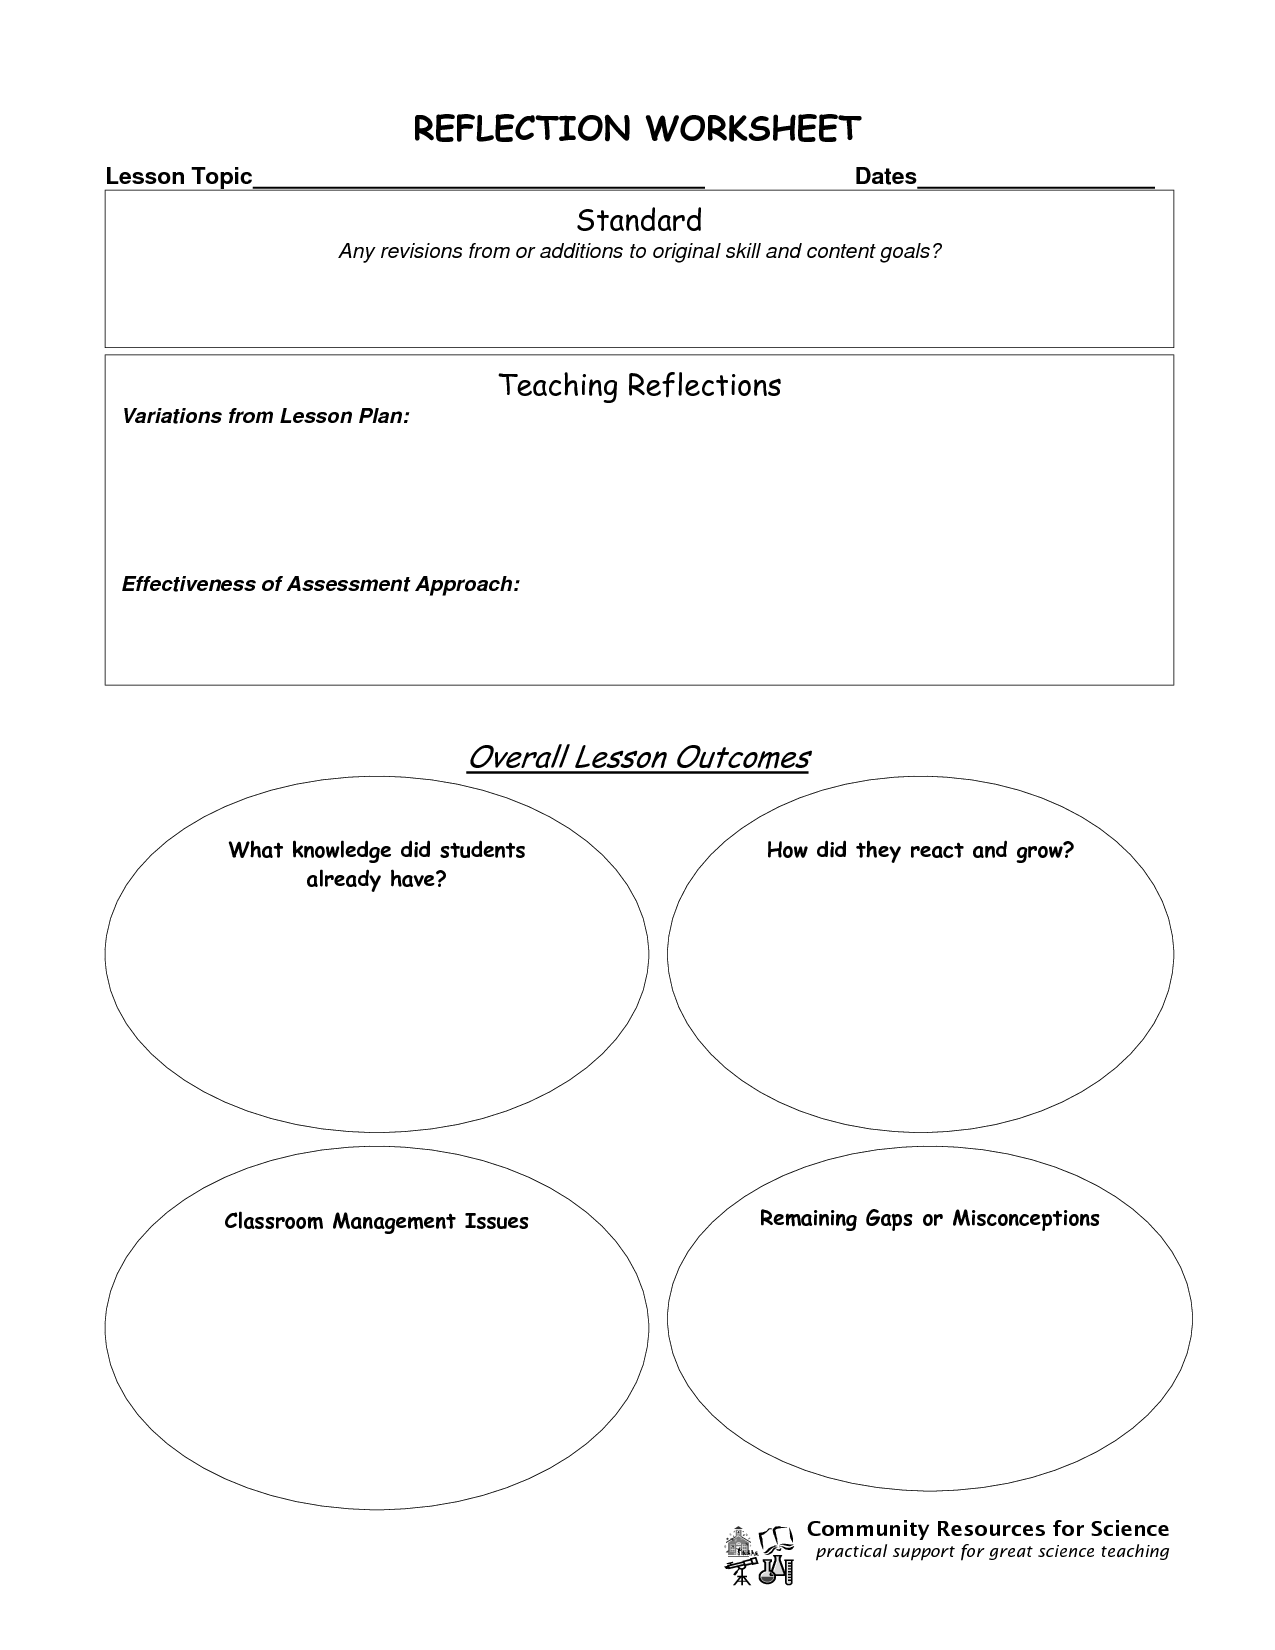 Reflection Worksheets Image